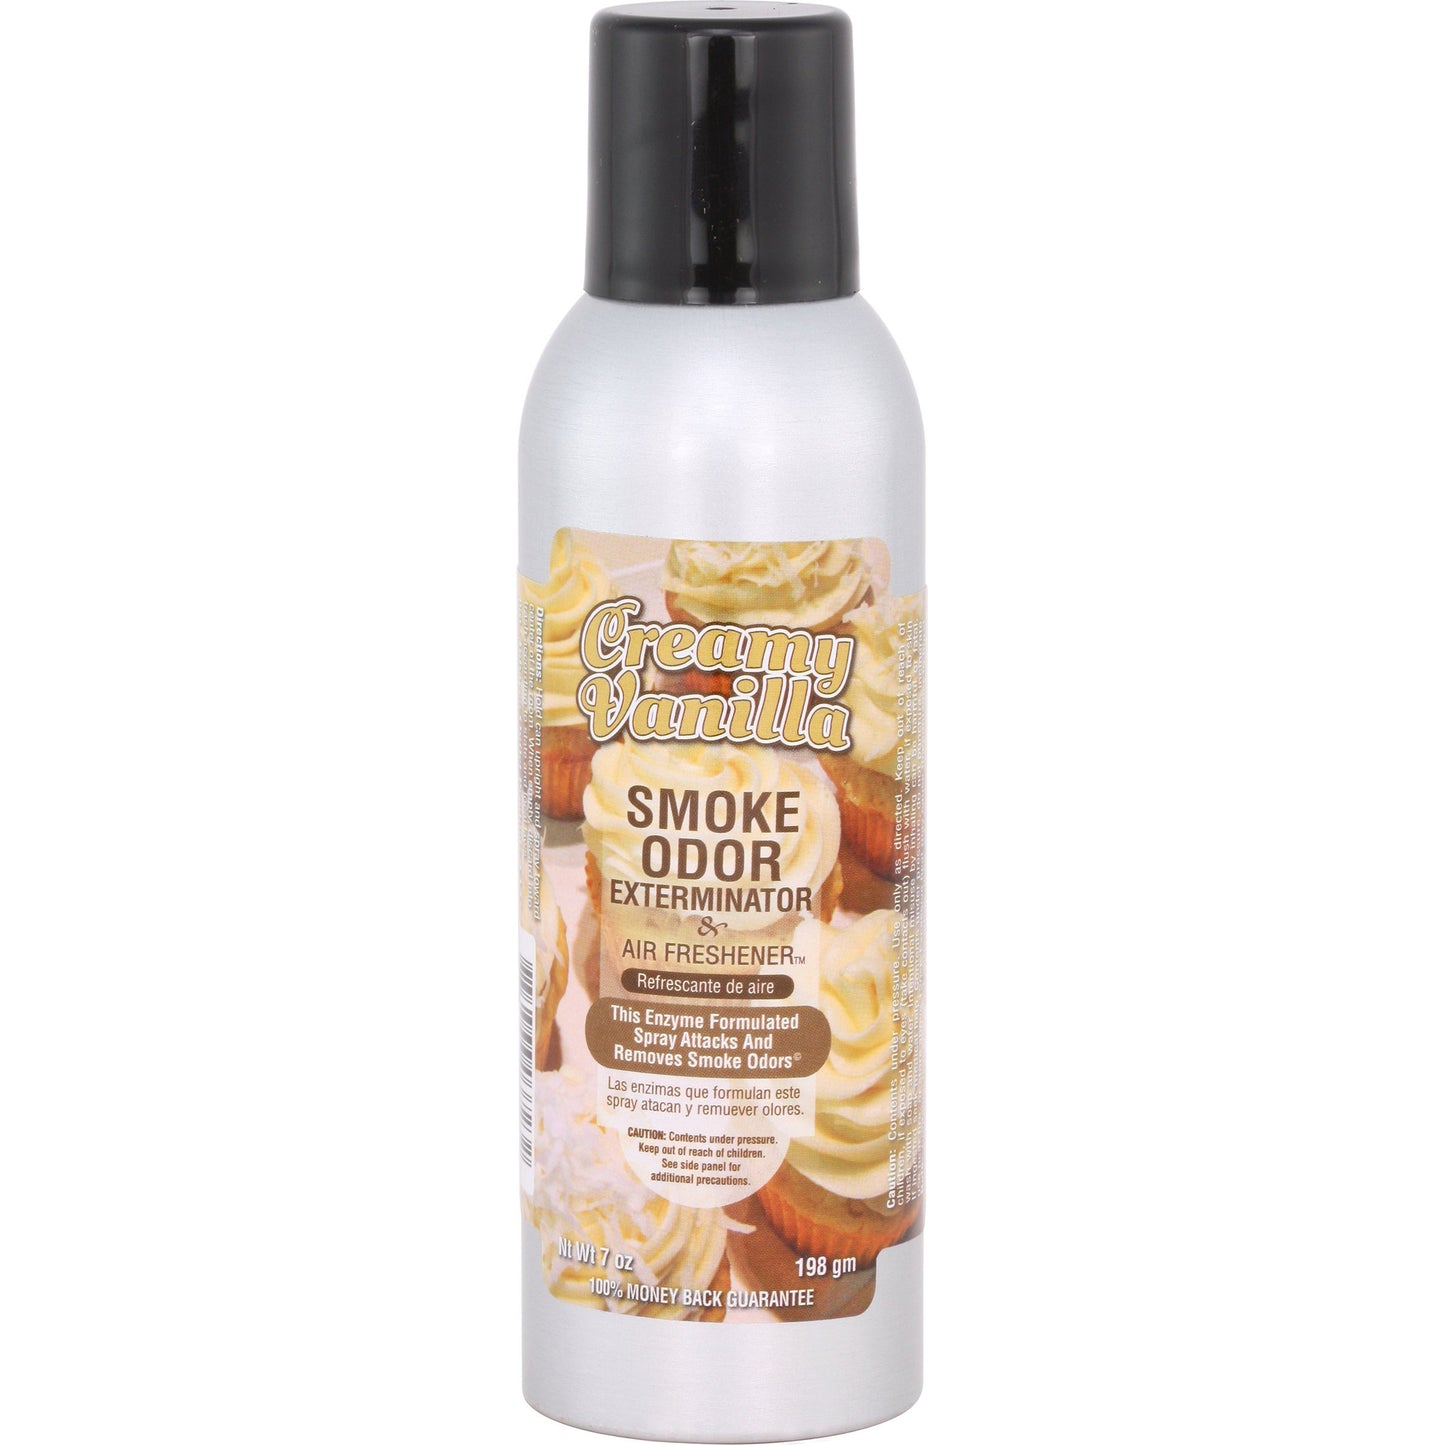 Smoke Odor Exterminator Spray 7oz - Creamy Vanilla